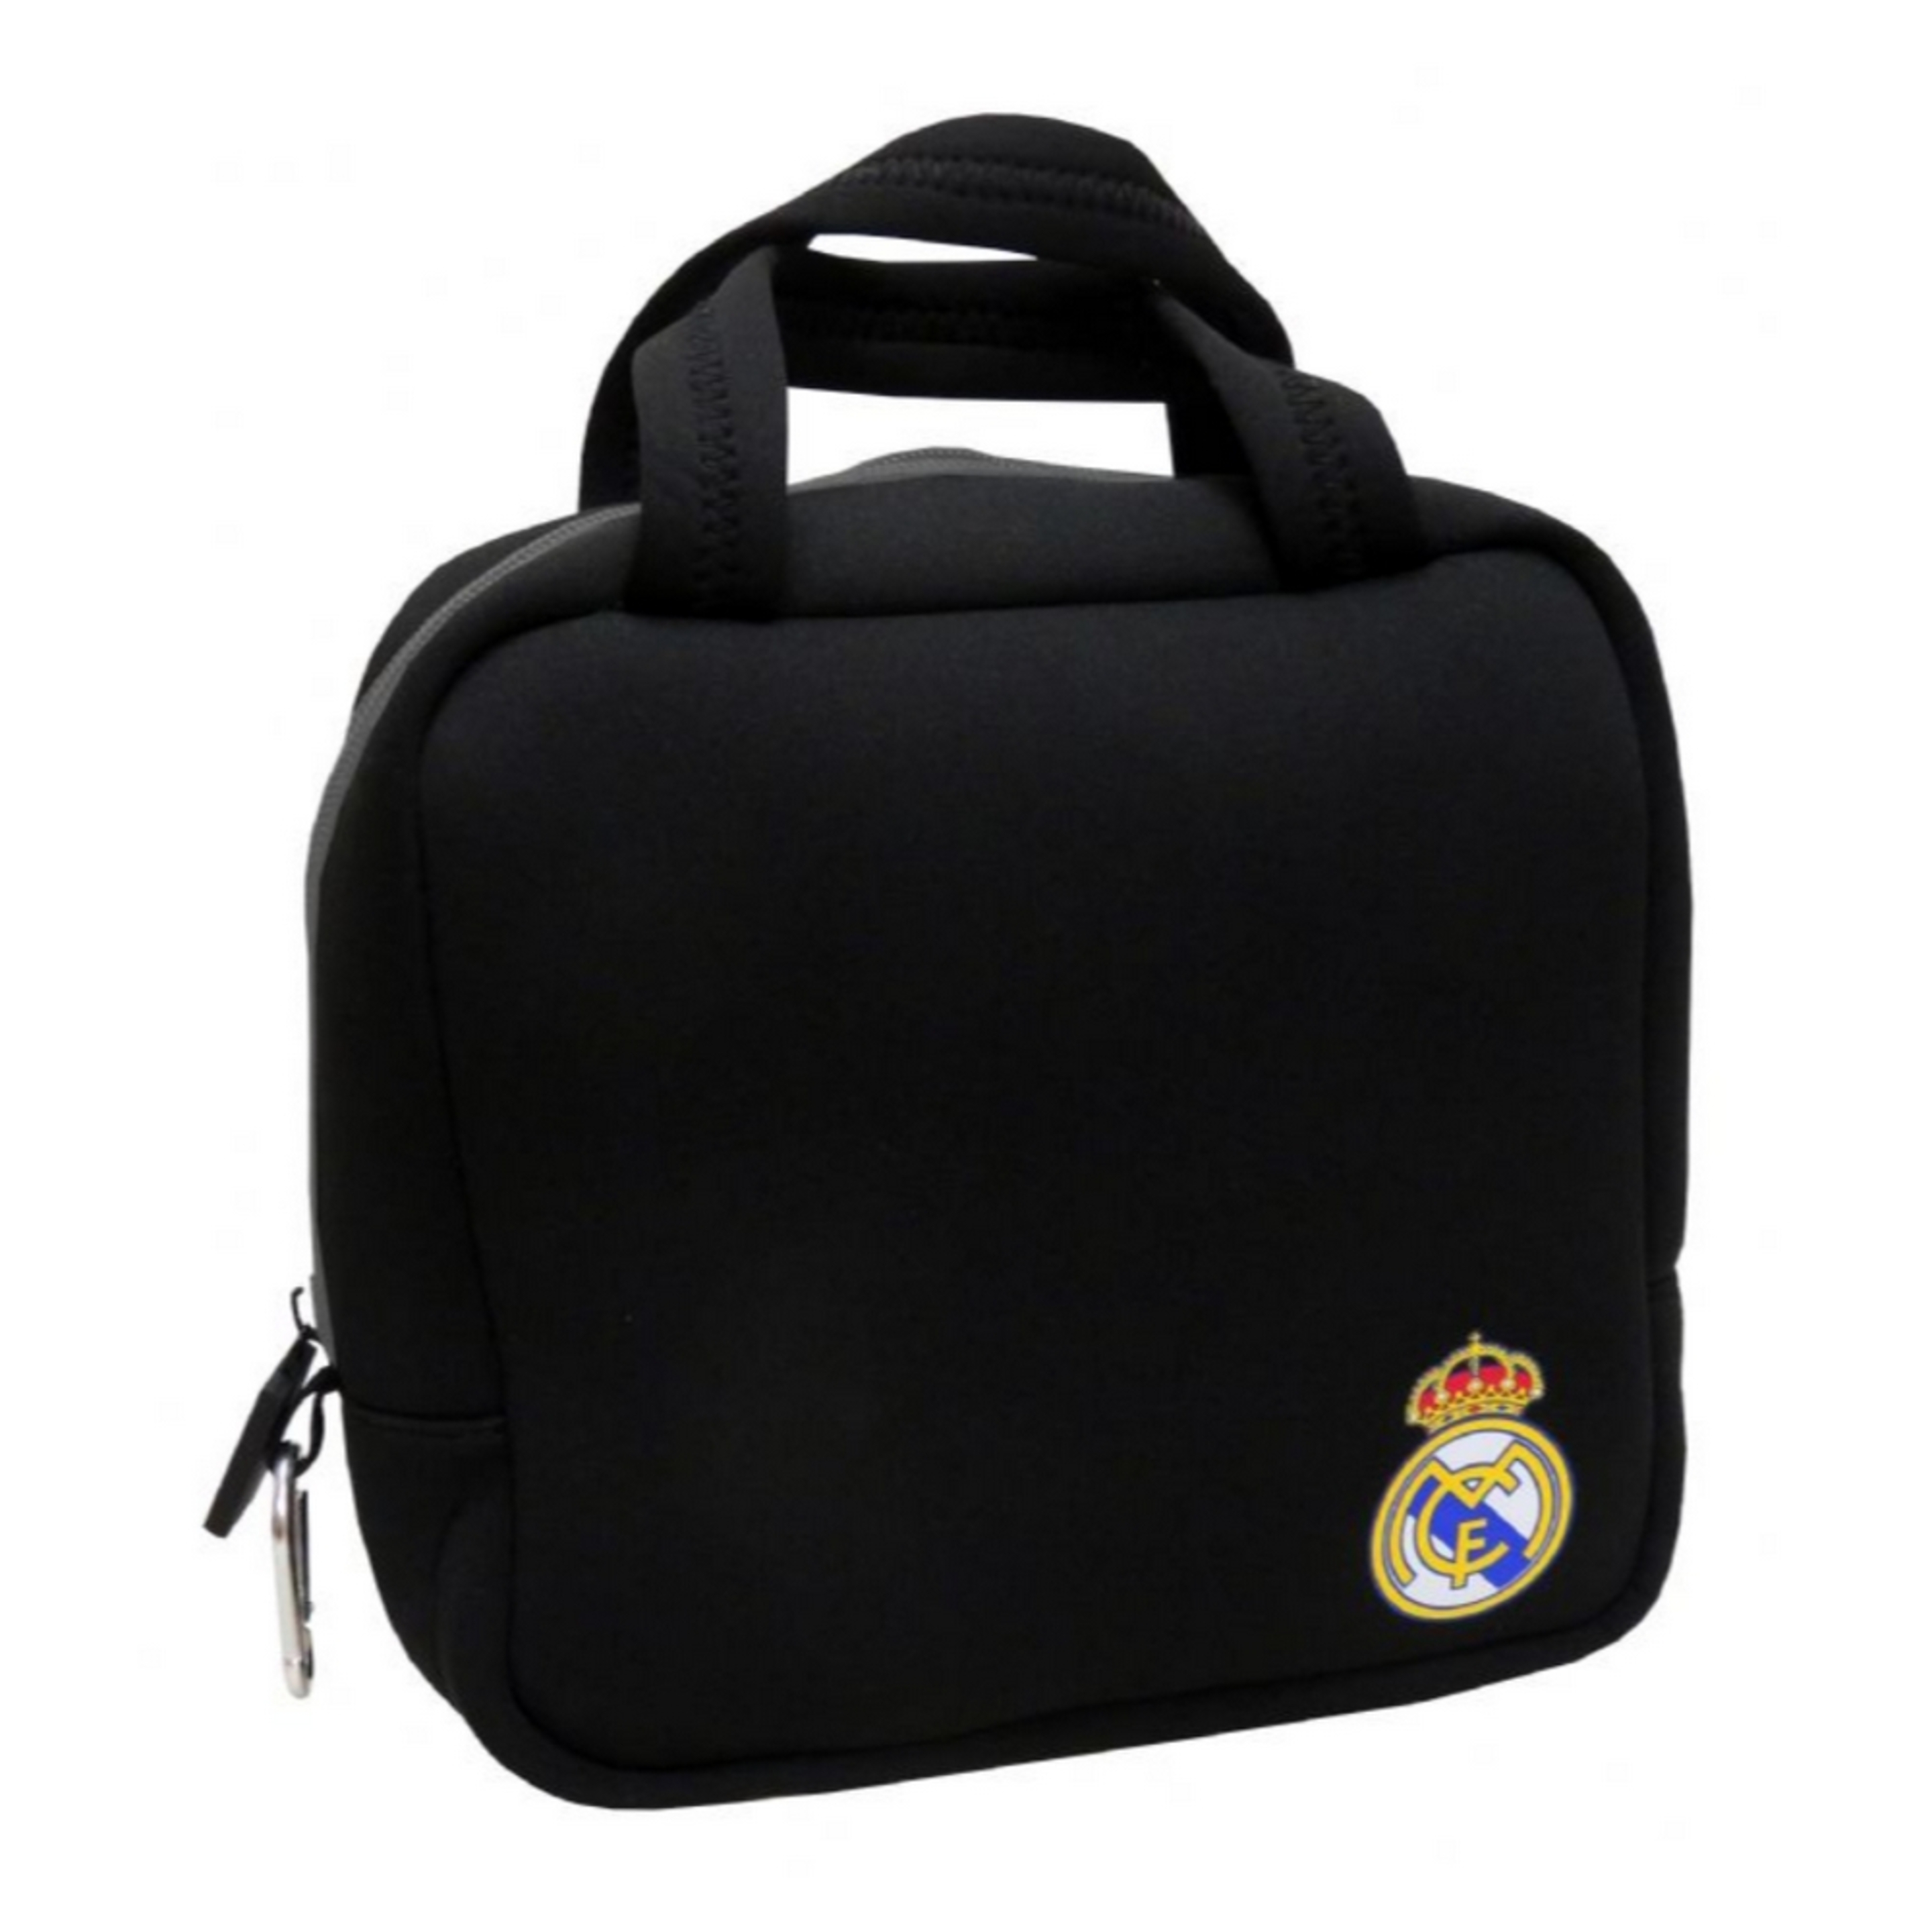 Bolsa Portaalimentos Real Madrid 60181 - negro - 